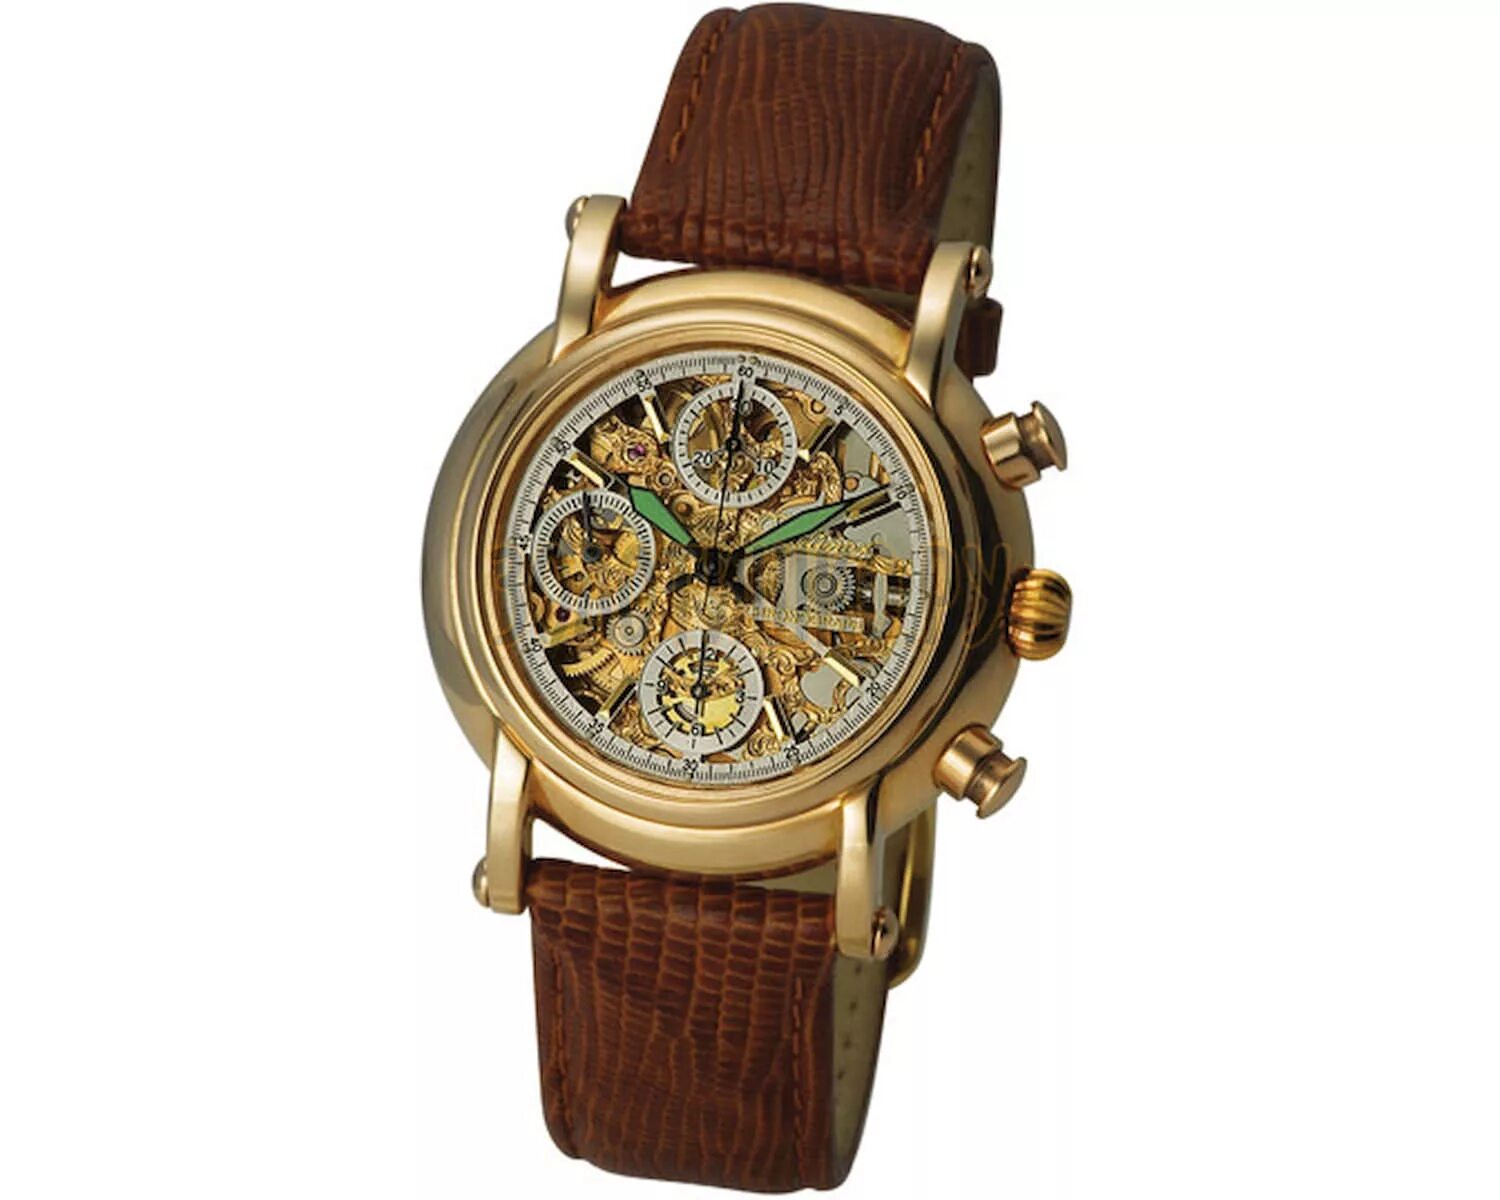 Мужские золотые часы Адмирал-2 Платинор. Платинор часы скелетоны. Часы Platinor Адмирал. Часы Платинор мужские Адмирал.